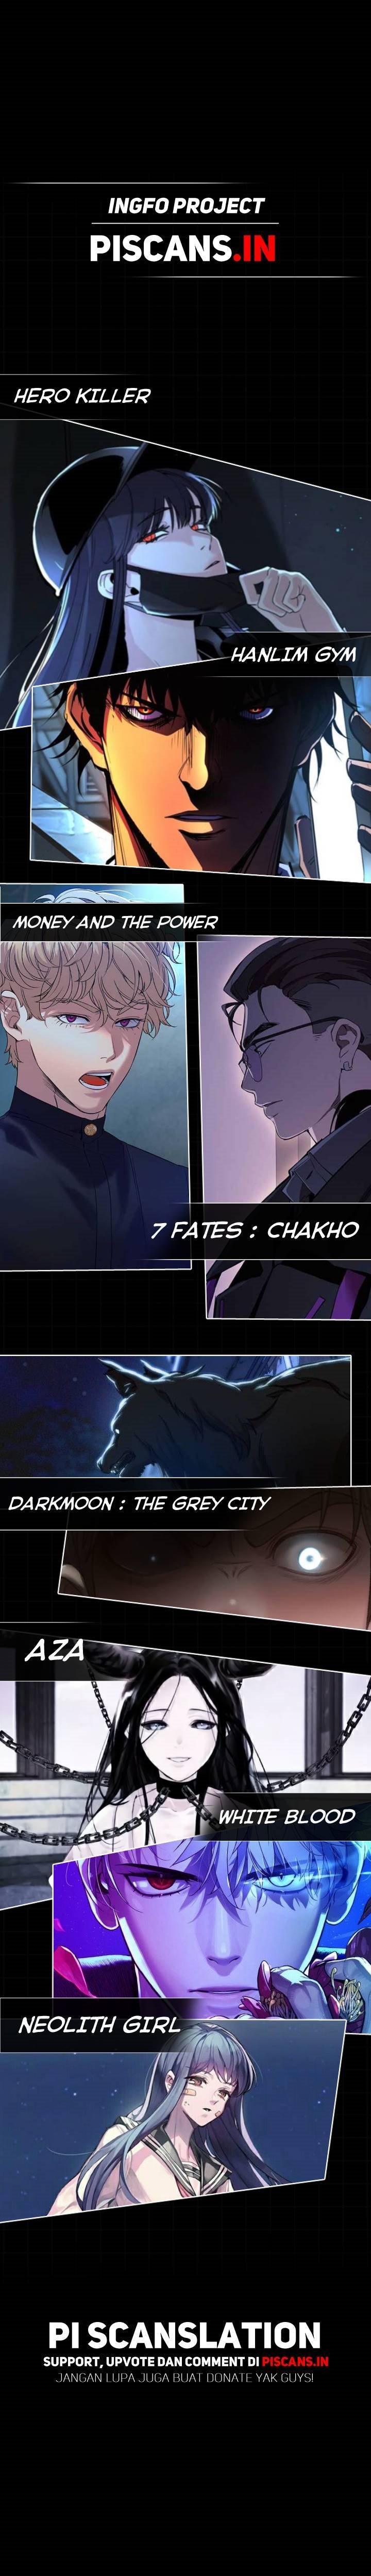 7FATES: CHAKHO Chapter 51